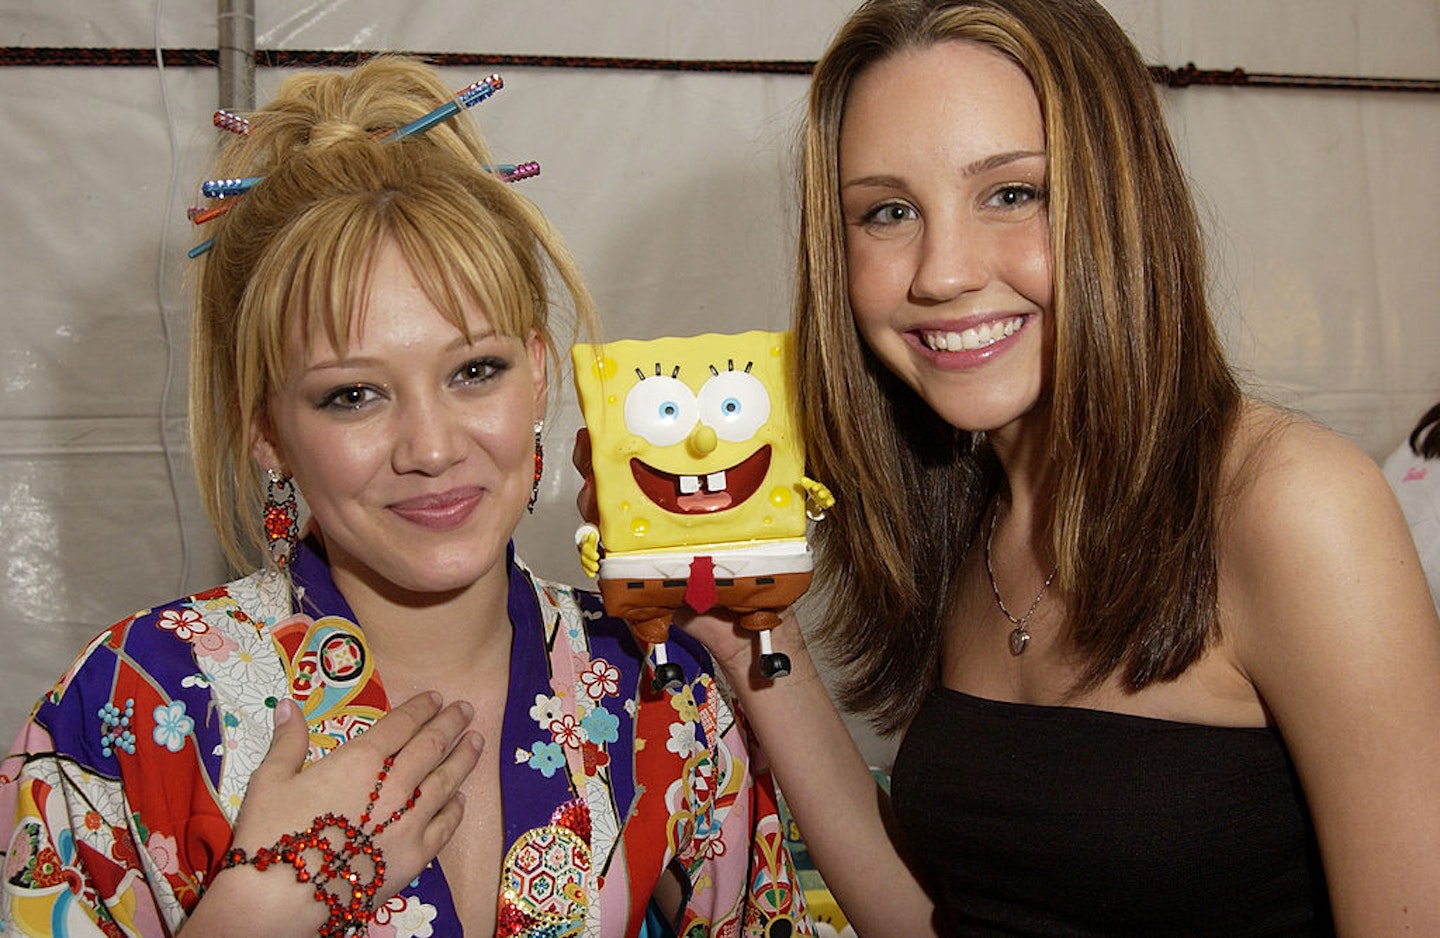 Hilary Duff and Amanda Bynes with Sponge Bob Square Pants (Photo by Jeff Vespa/WireImage)